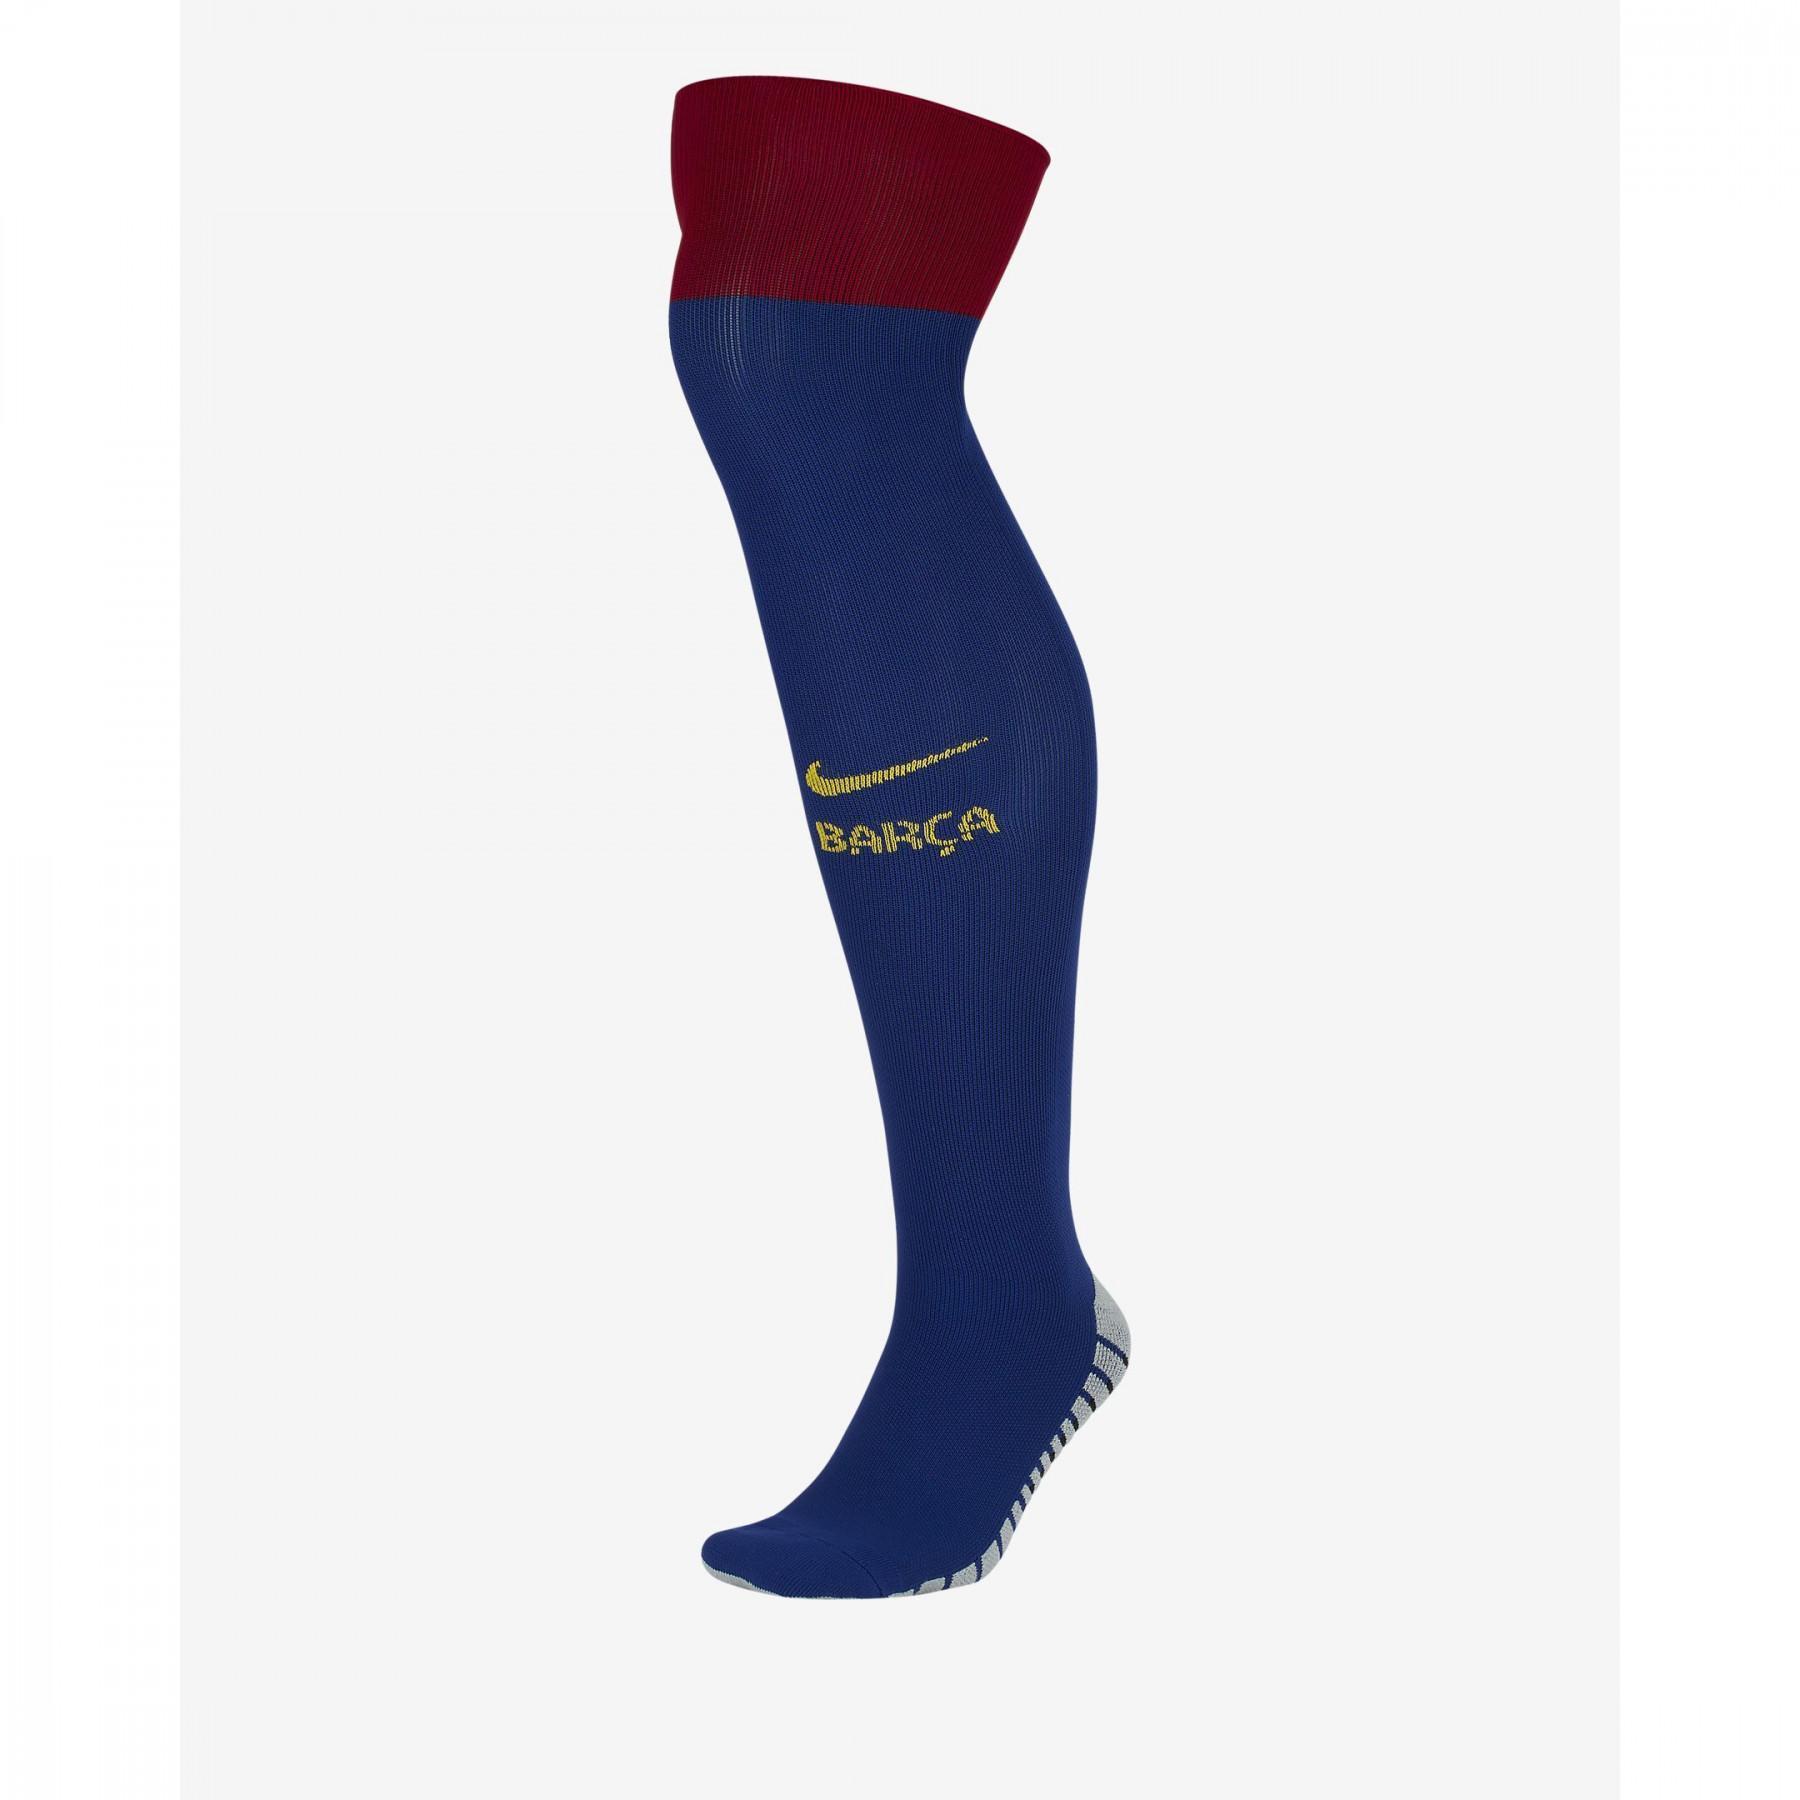 Barcelona home socks 2019/20